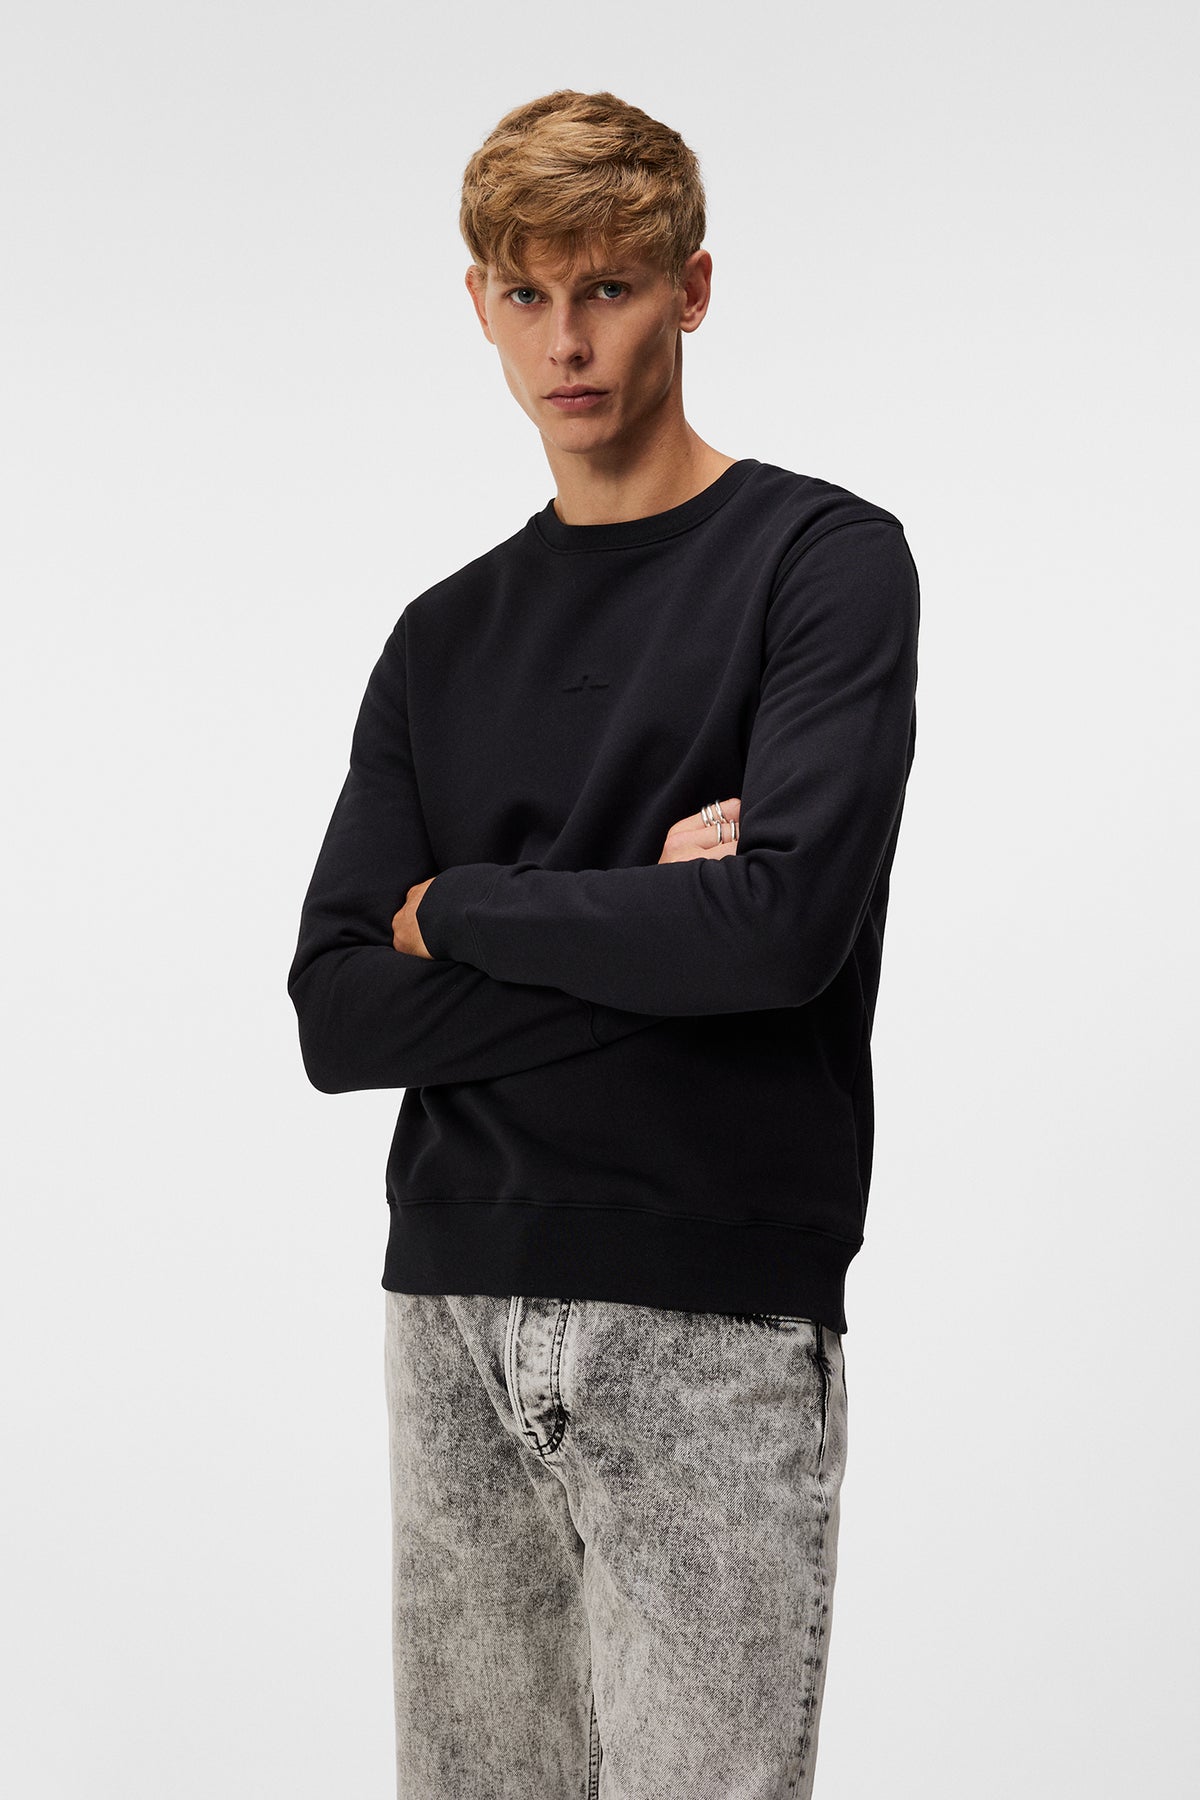 J.LINDEBERG Men's Fashion Sweaters & Sweatshirts